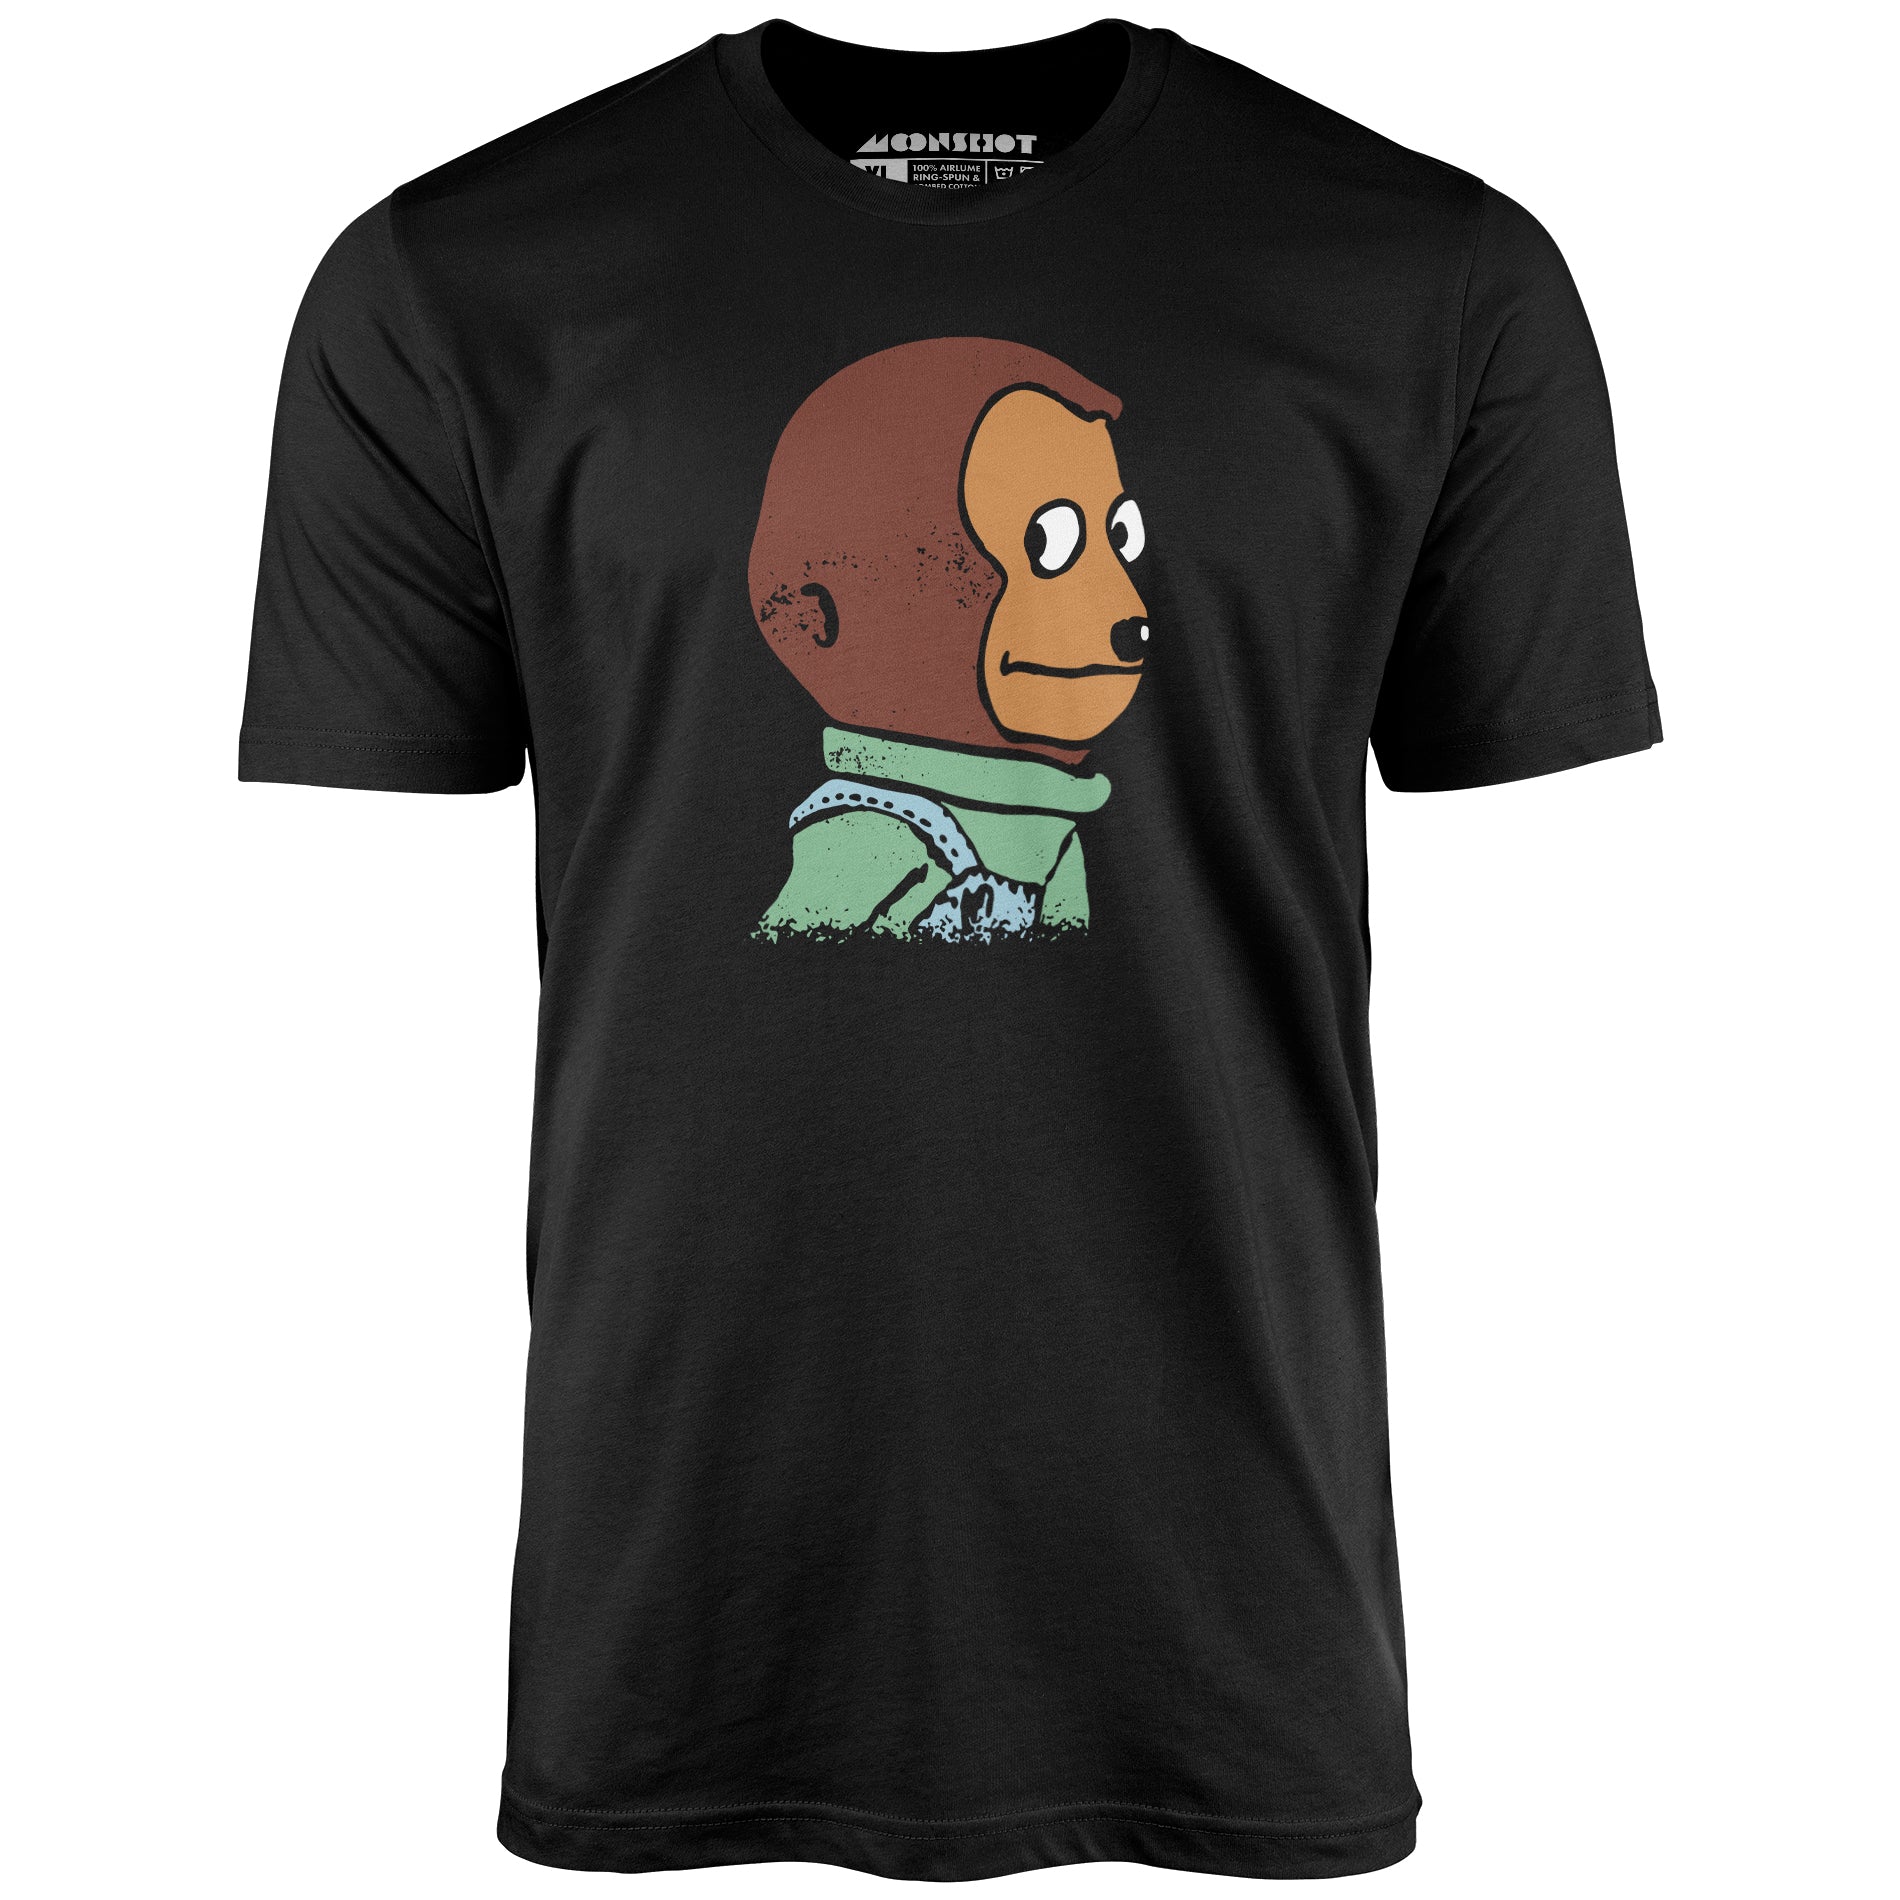 Awkward Look Monkey Meme - Unisex T-Shirt